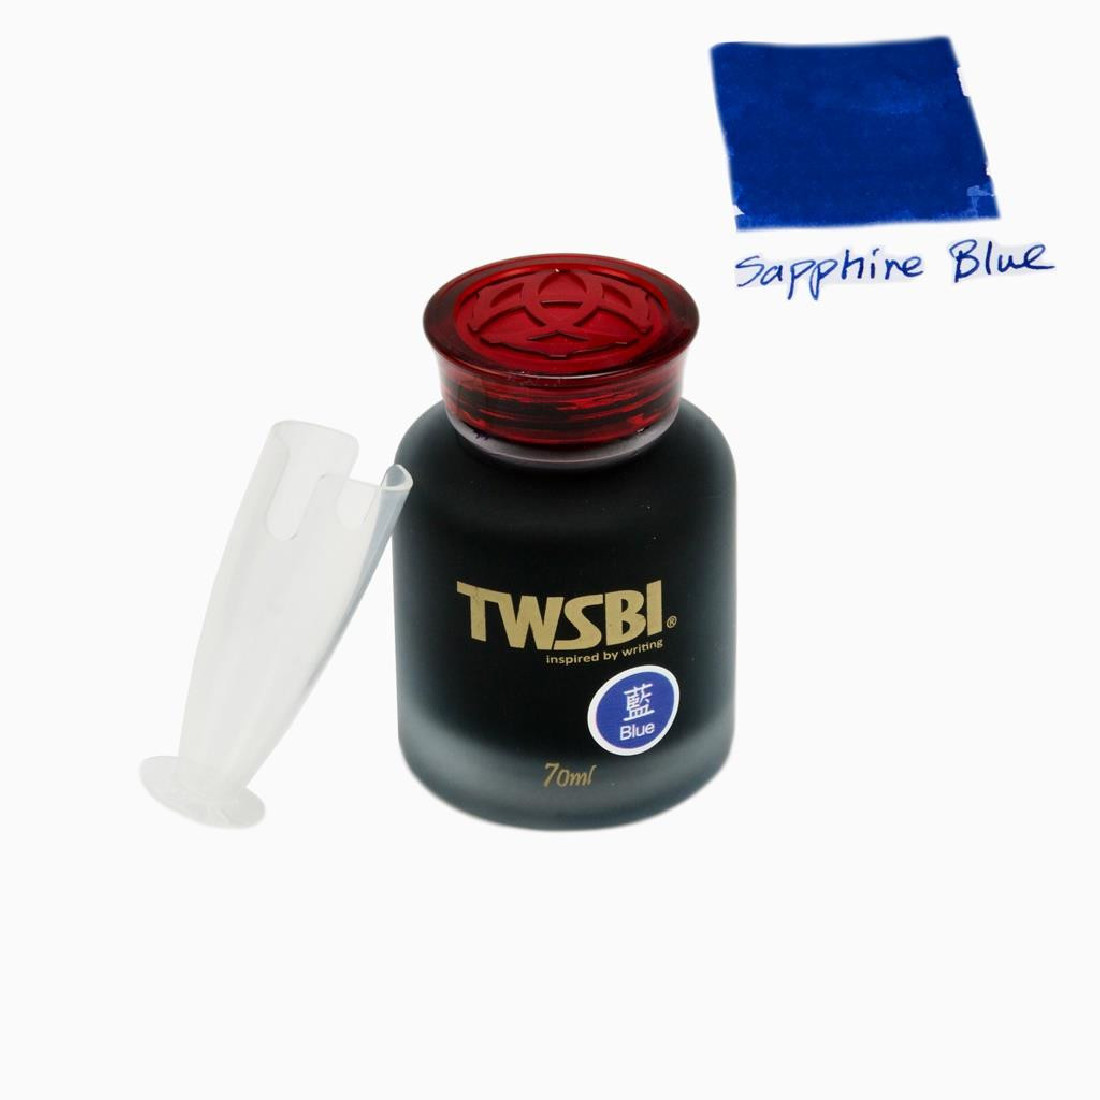 Twsbi 70ml ink sapphire blue